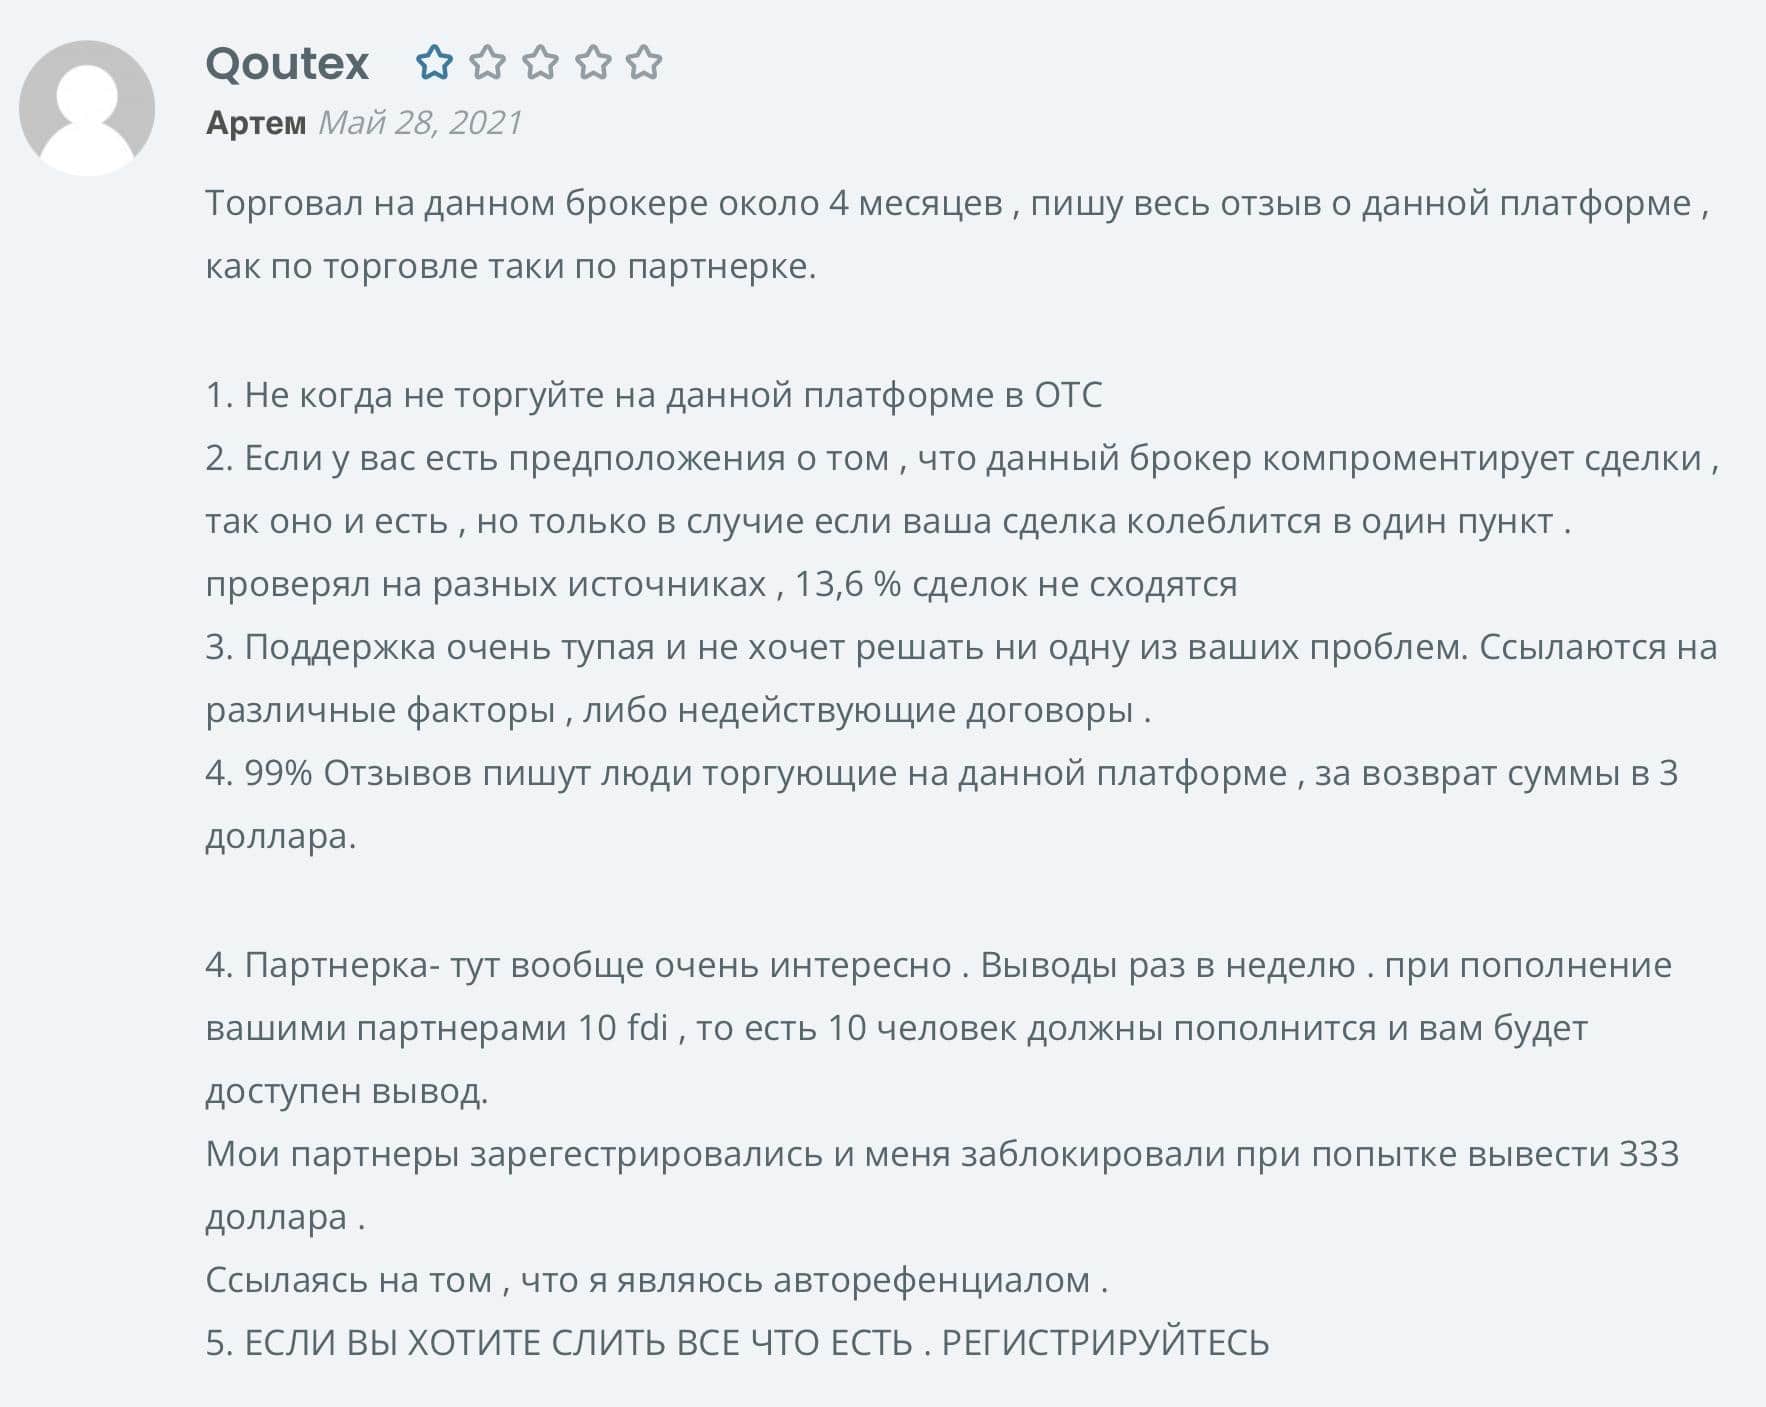 Quotex (qxbroker.com) отзывы